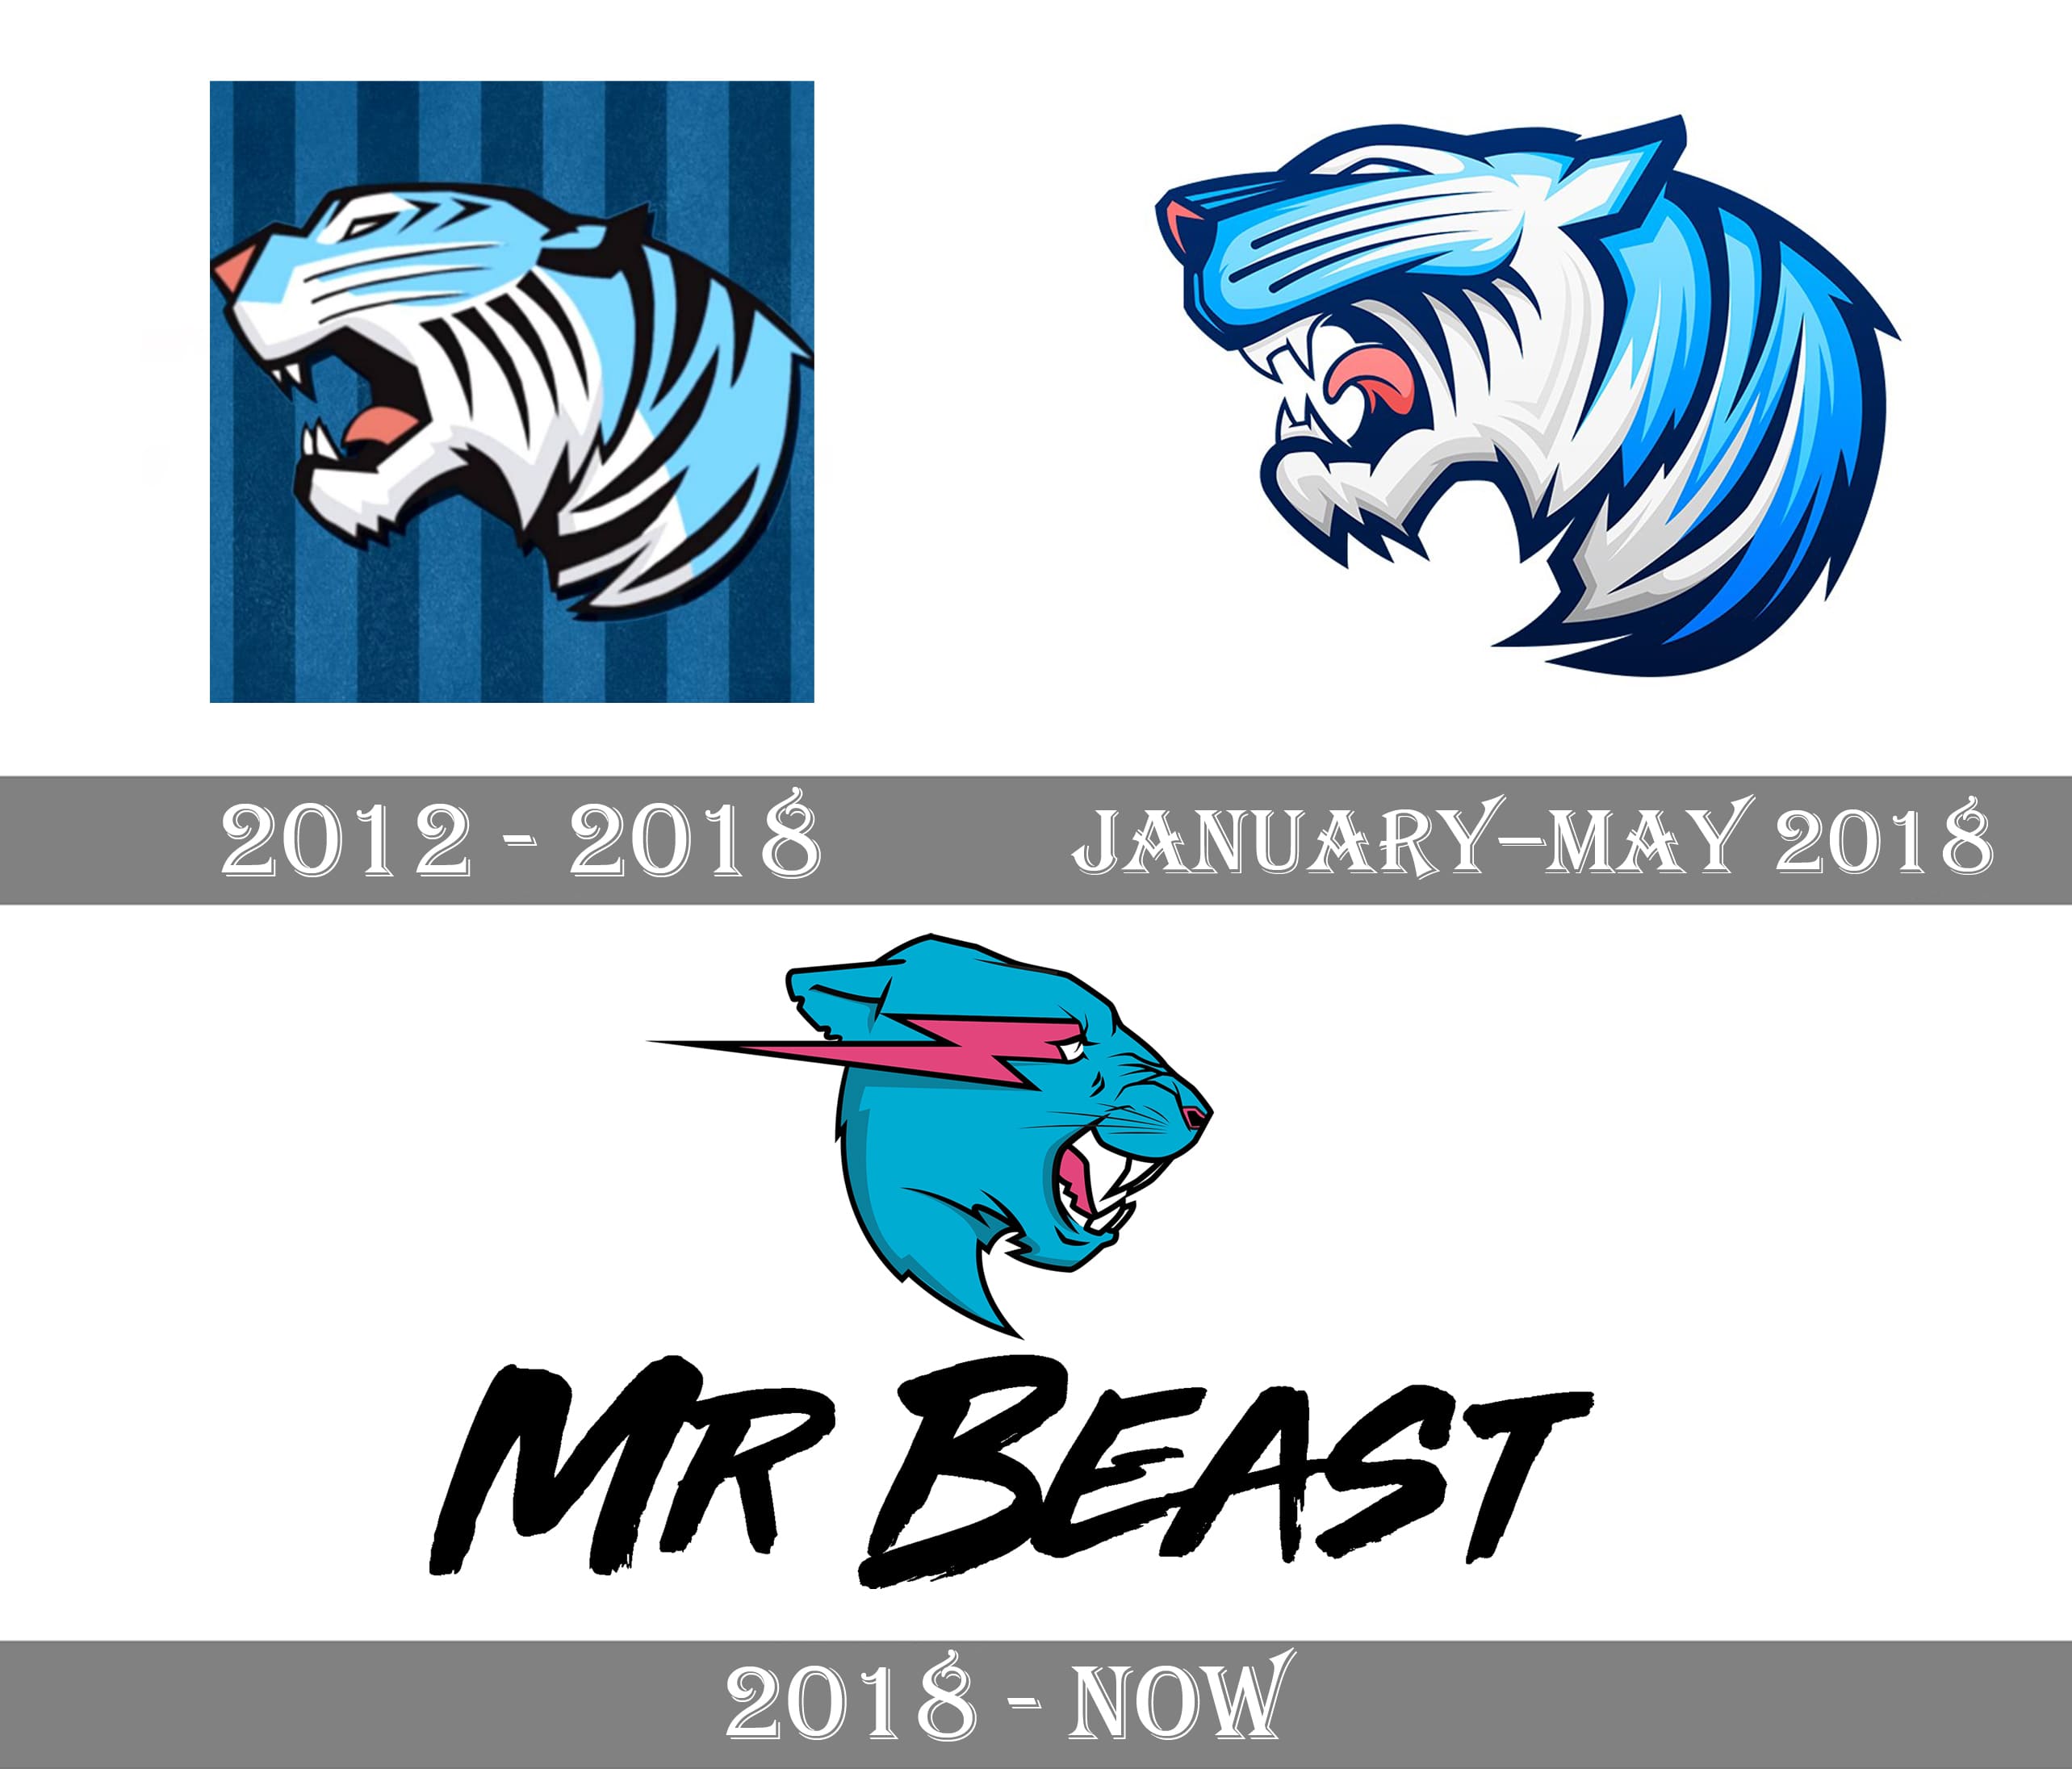 MrBeast logo and his history